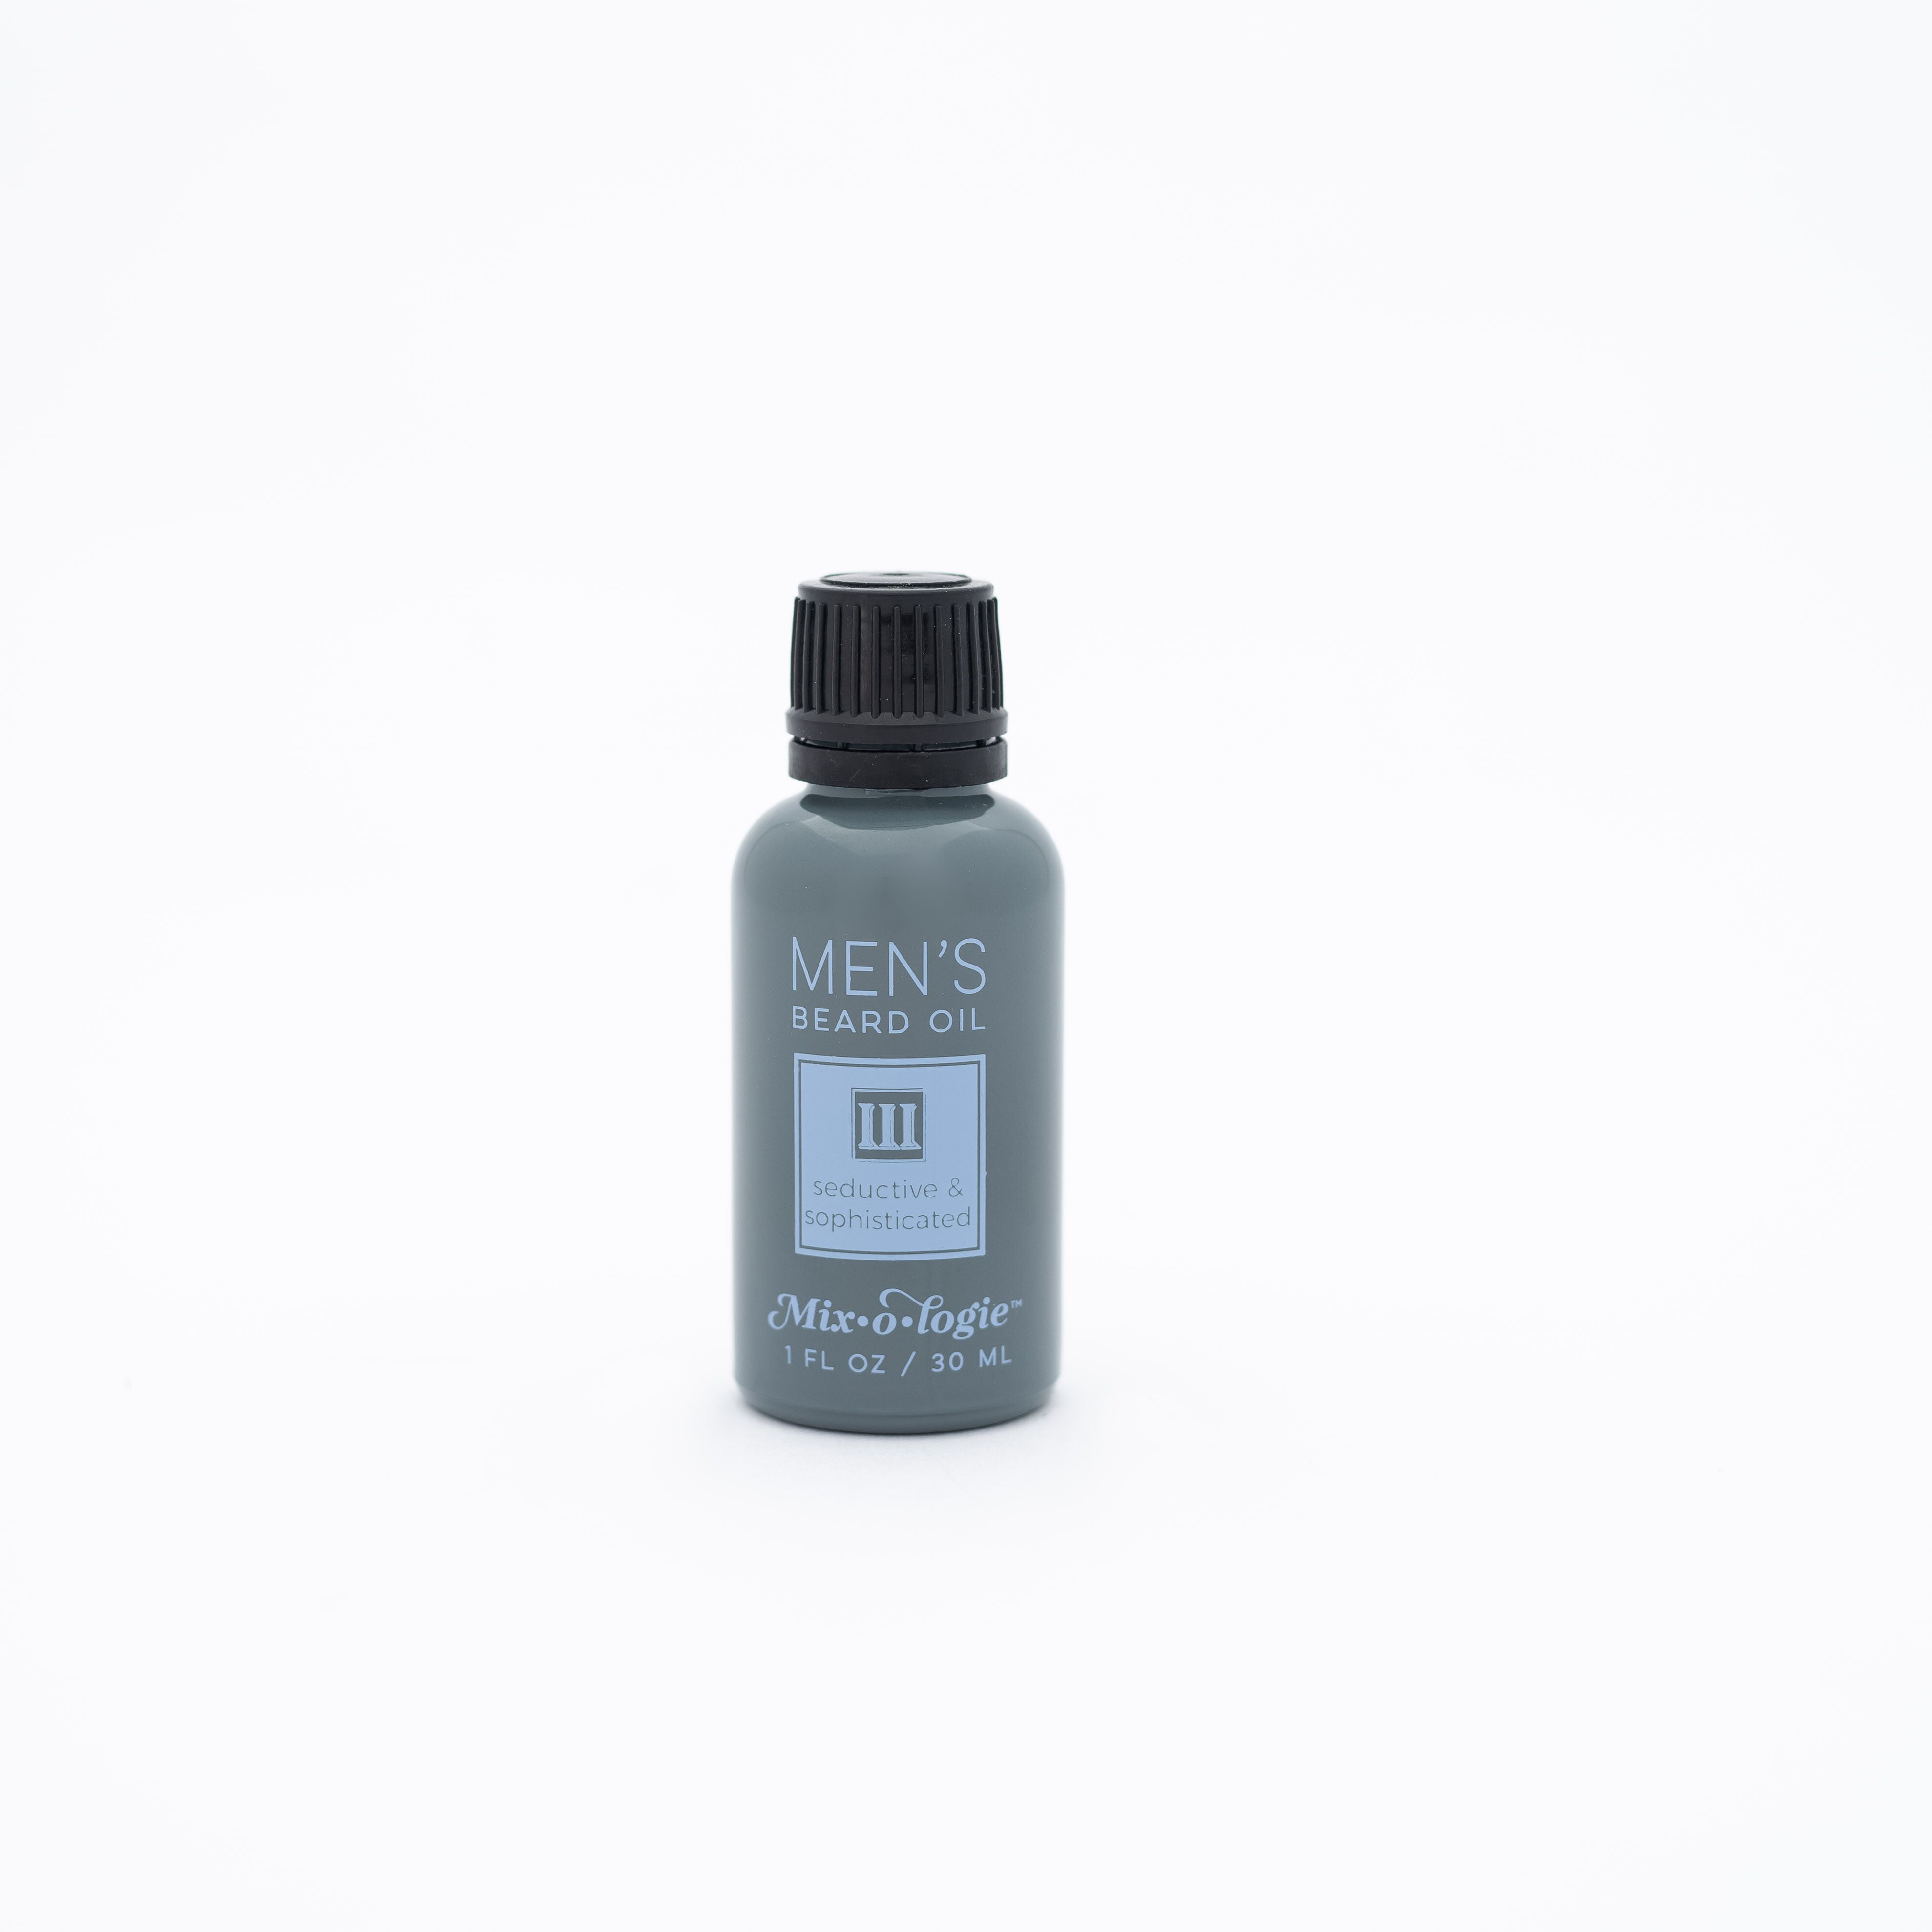 MEN-III Beard Oil (Seductive & Sophisticated)